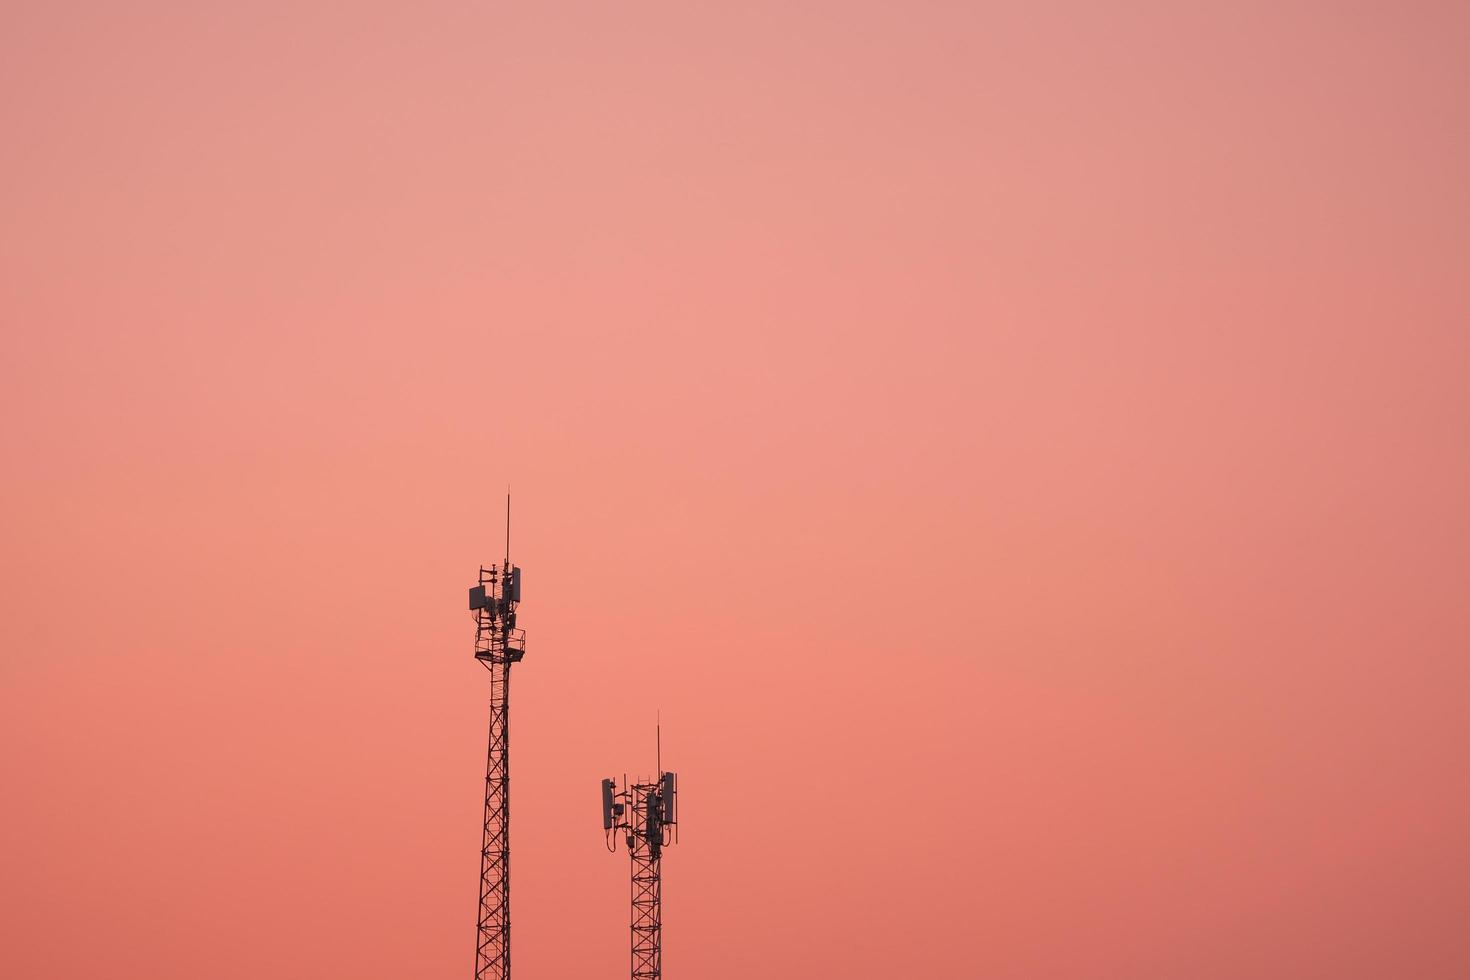 antenn utsända signal telekommunikation i ett rosa orange himmel bakgrund foto